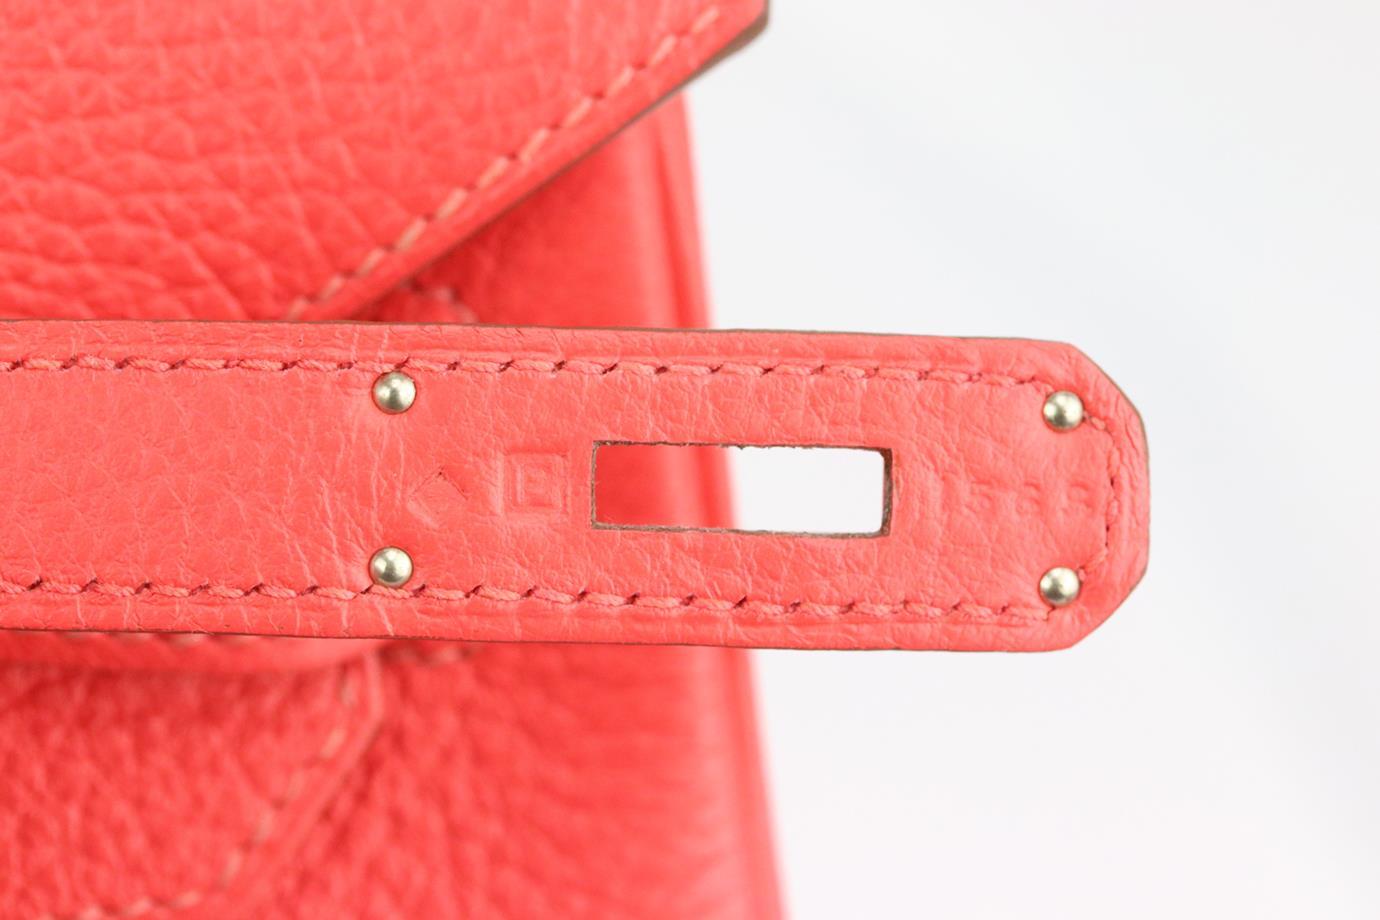 Hermès 2012 Birkin 35cm Togo Leather Bag For Sale 5